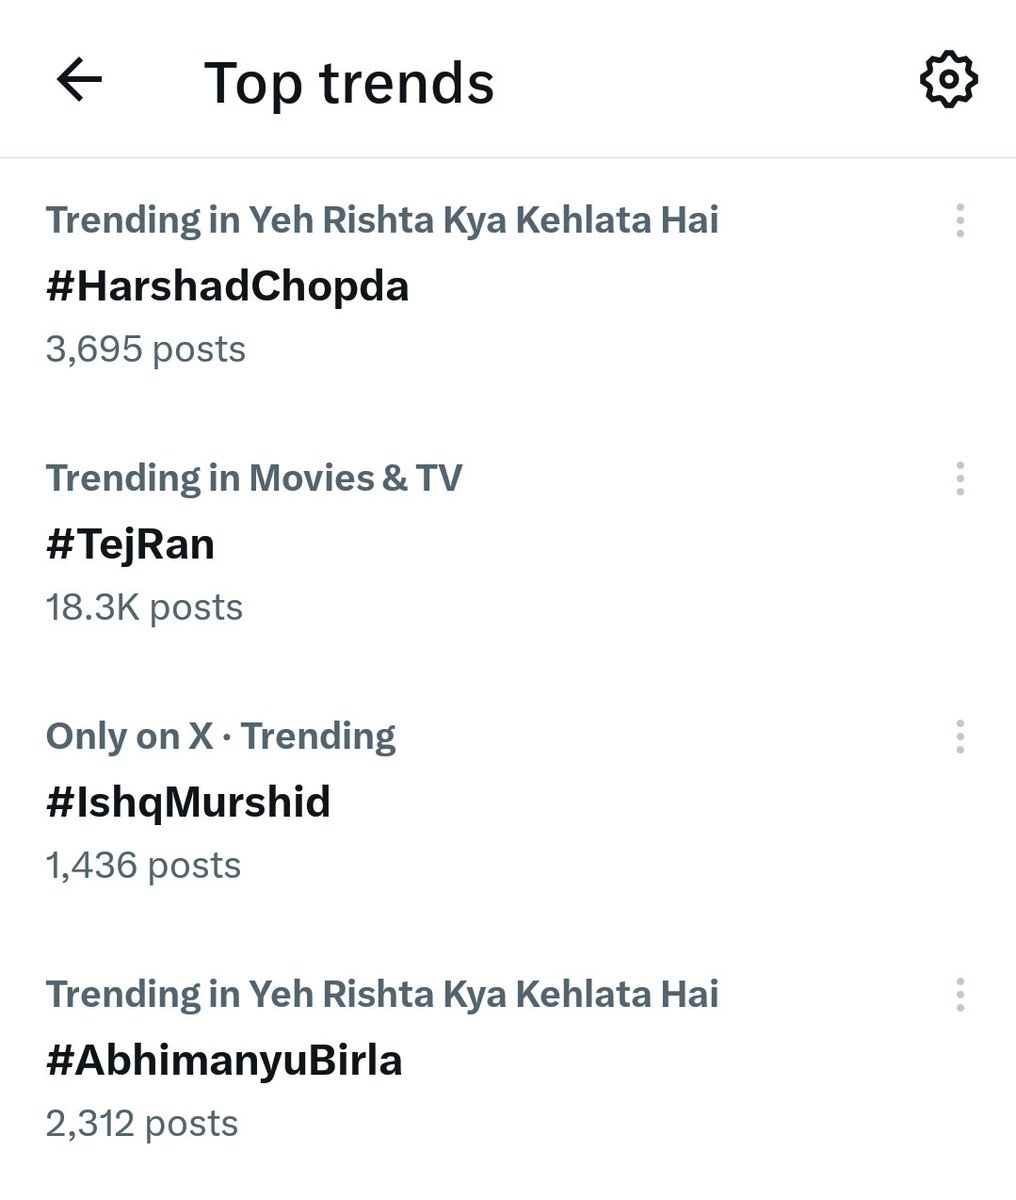 Still trending 

#AbhimanyuBirla #HarshadChopda @iconic_award